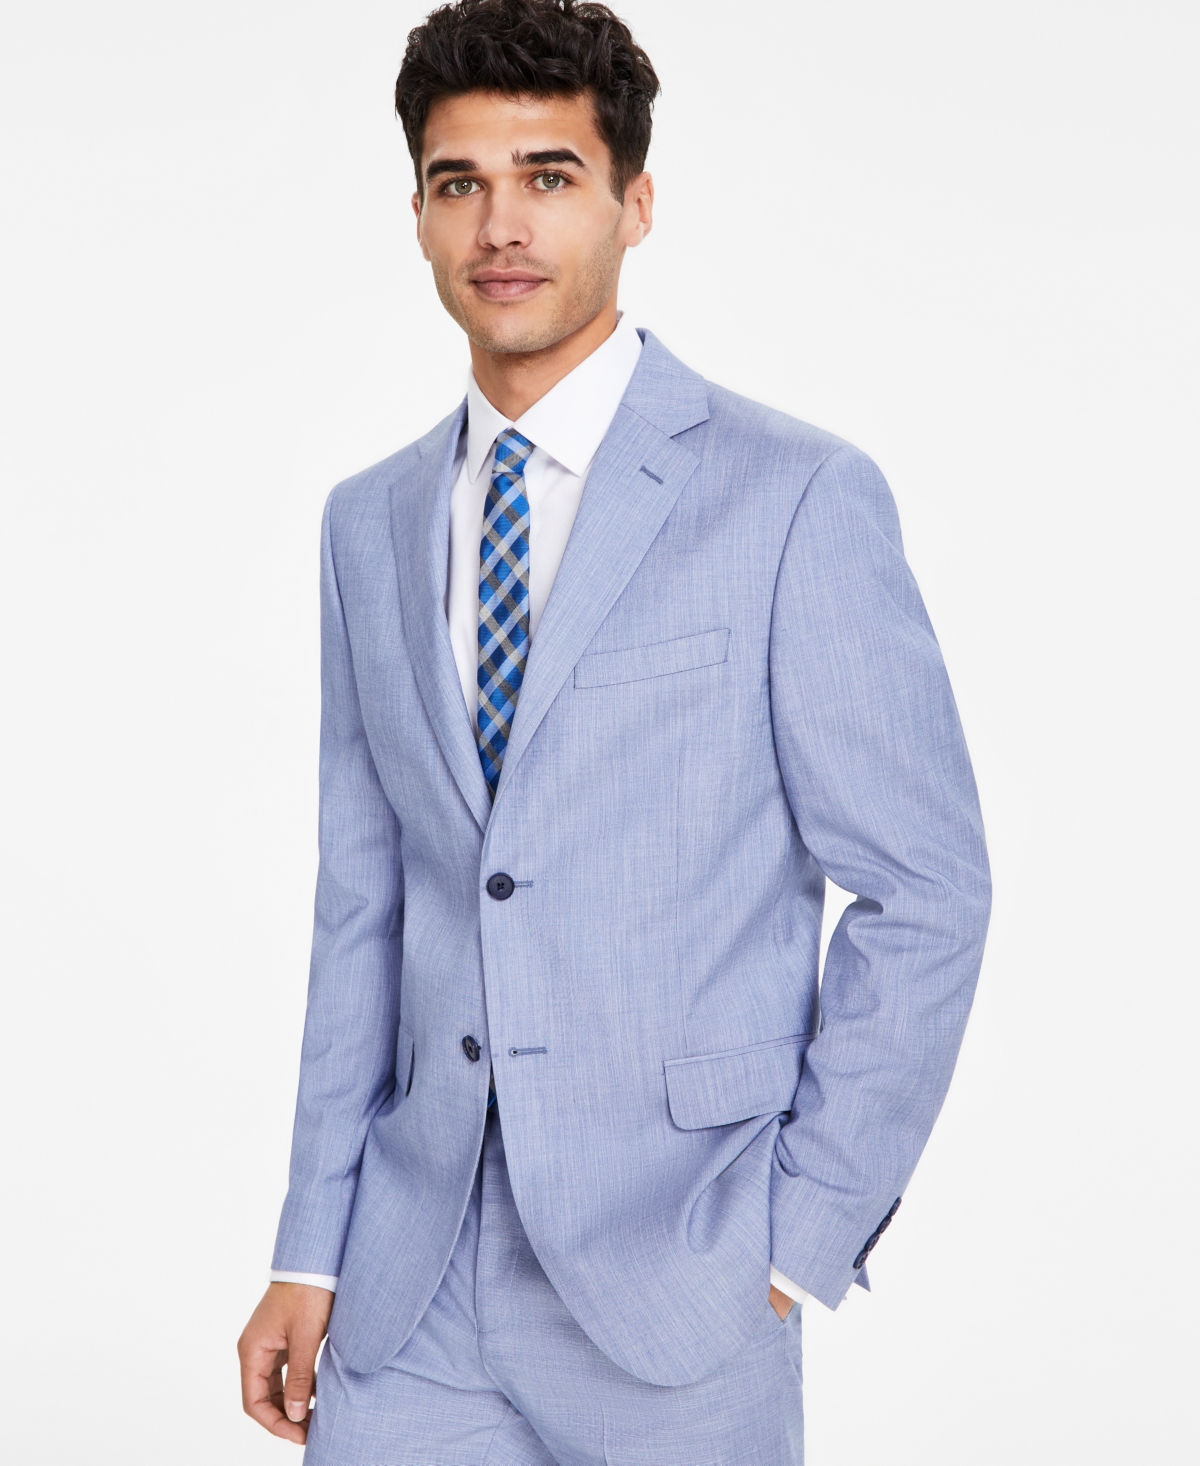 Men's Modern-Fit Light Blue Neat Suit Separate Jacket - Light Blue